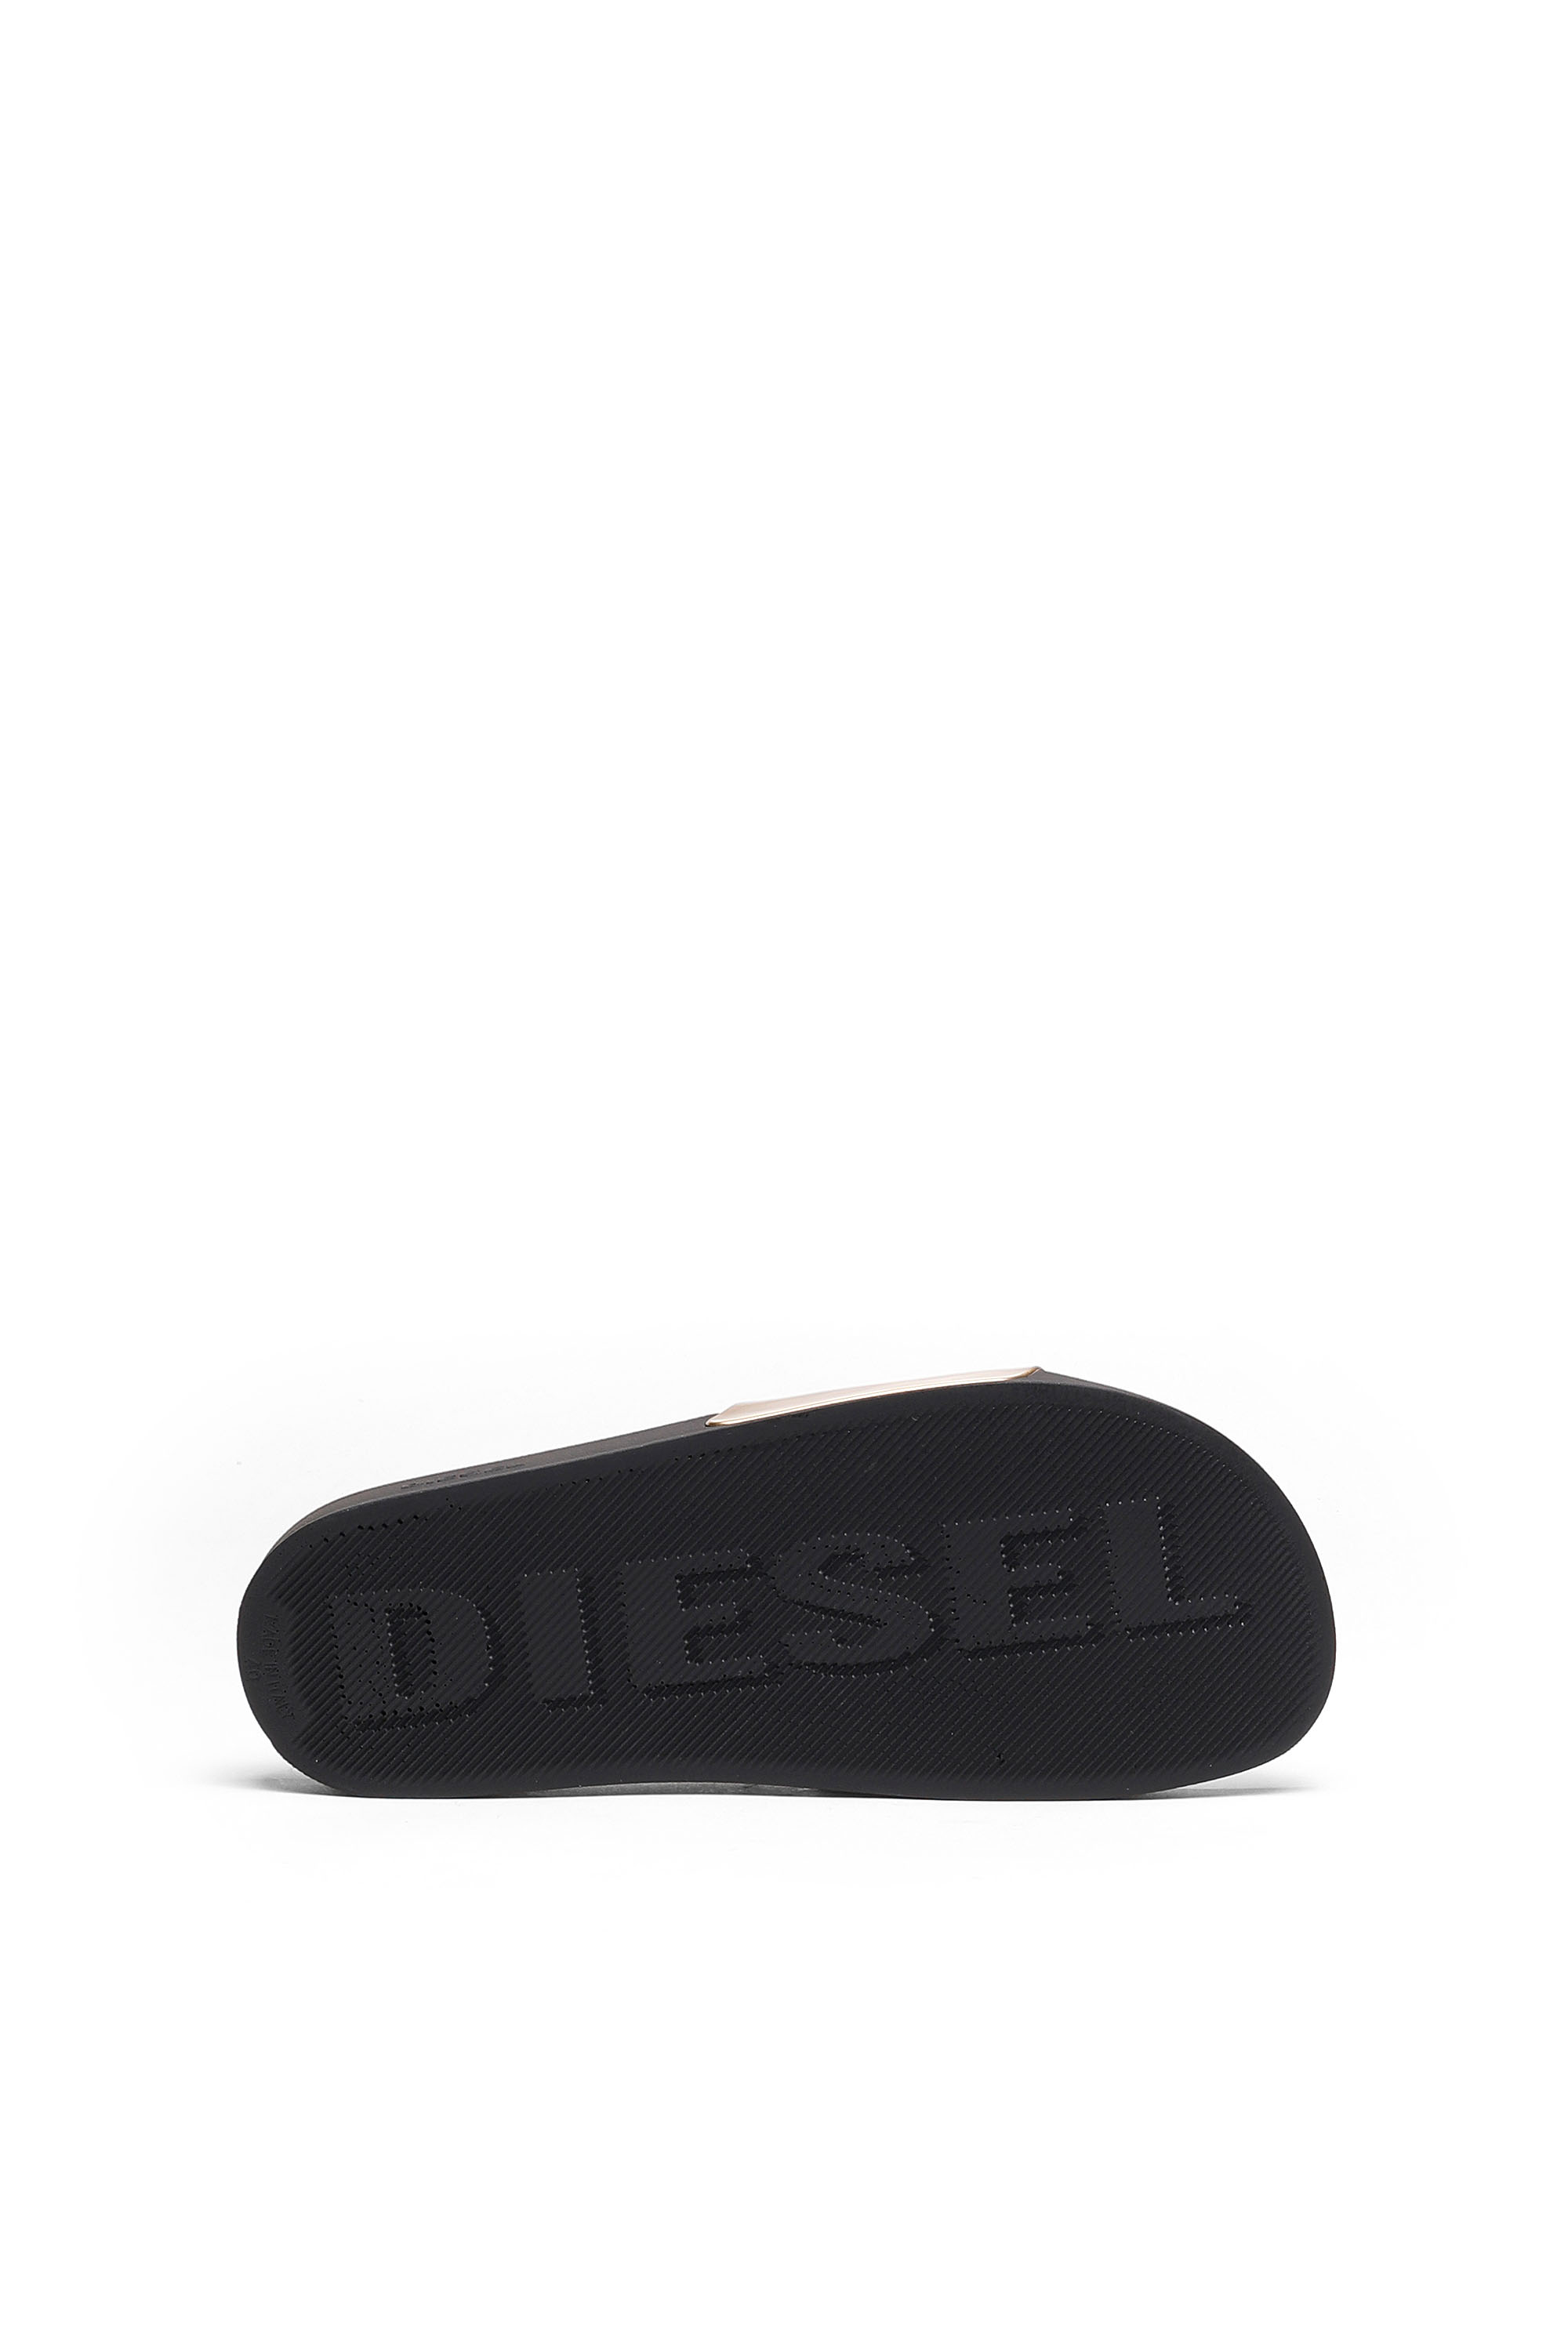 Diesel - SA-MAYEMI, Black/Gold - Image 5